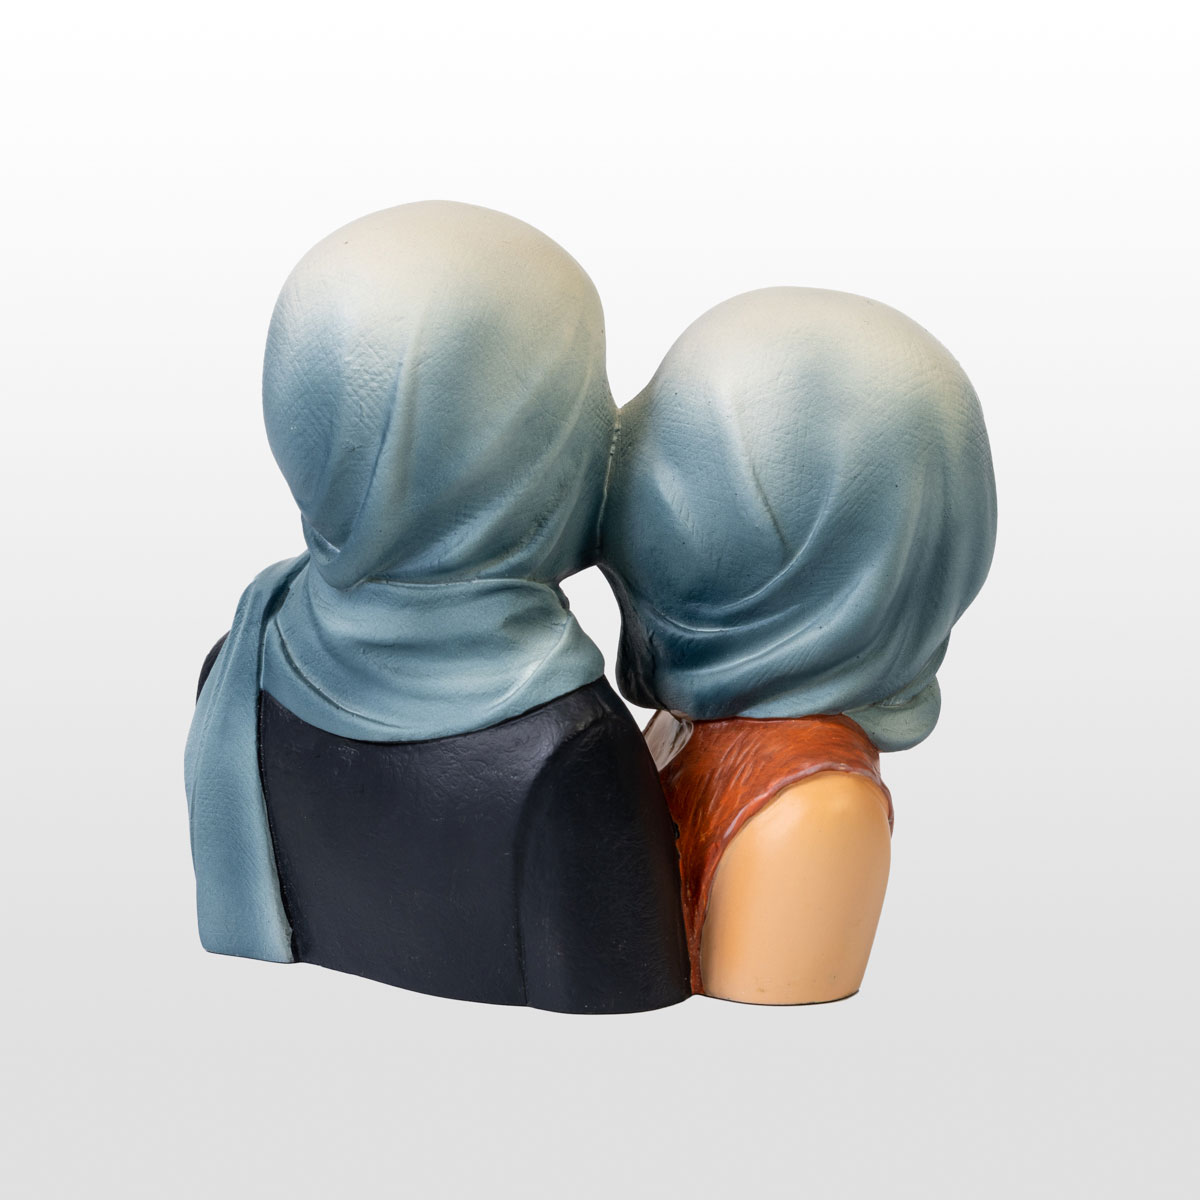 René Magritte figurine : The lovers (detail n°4)